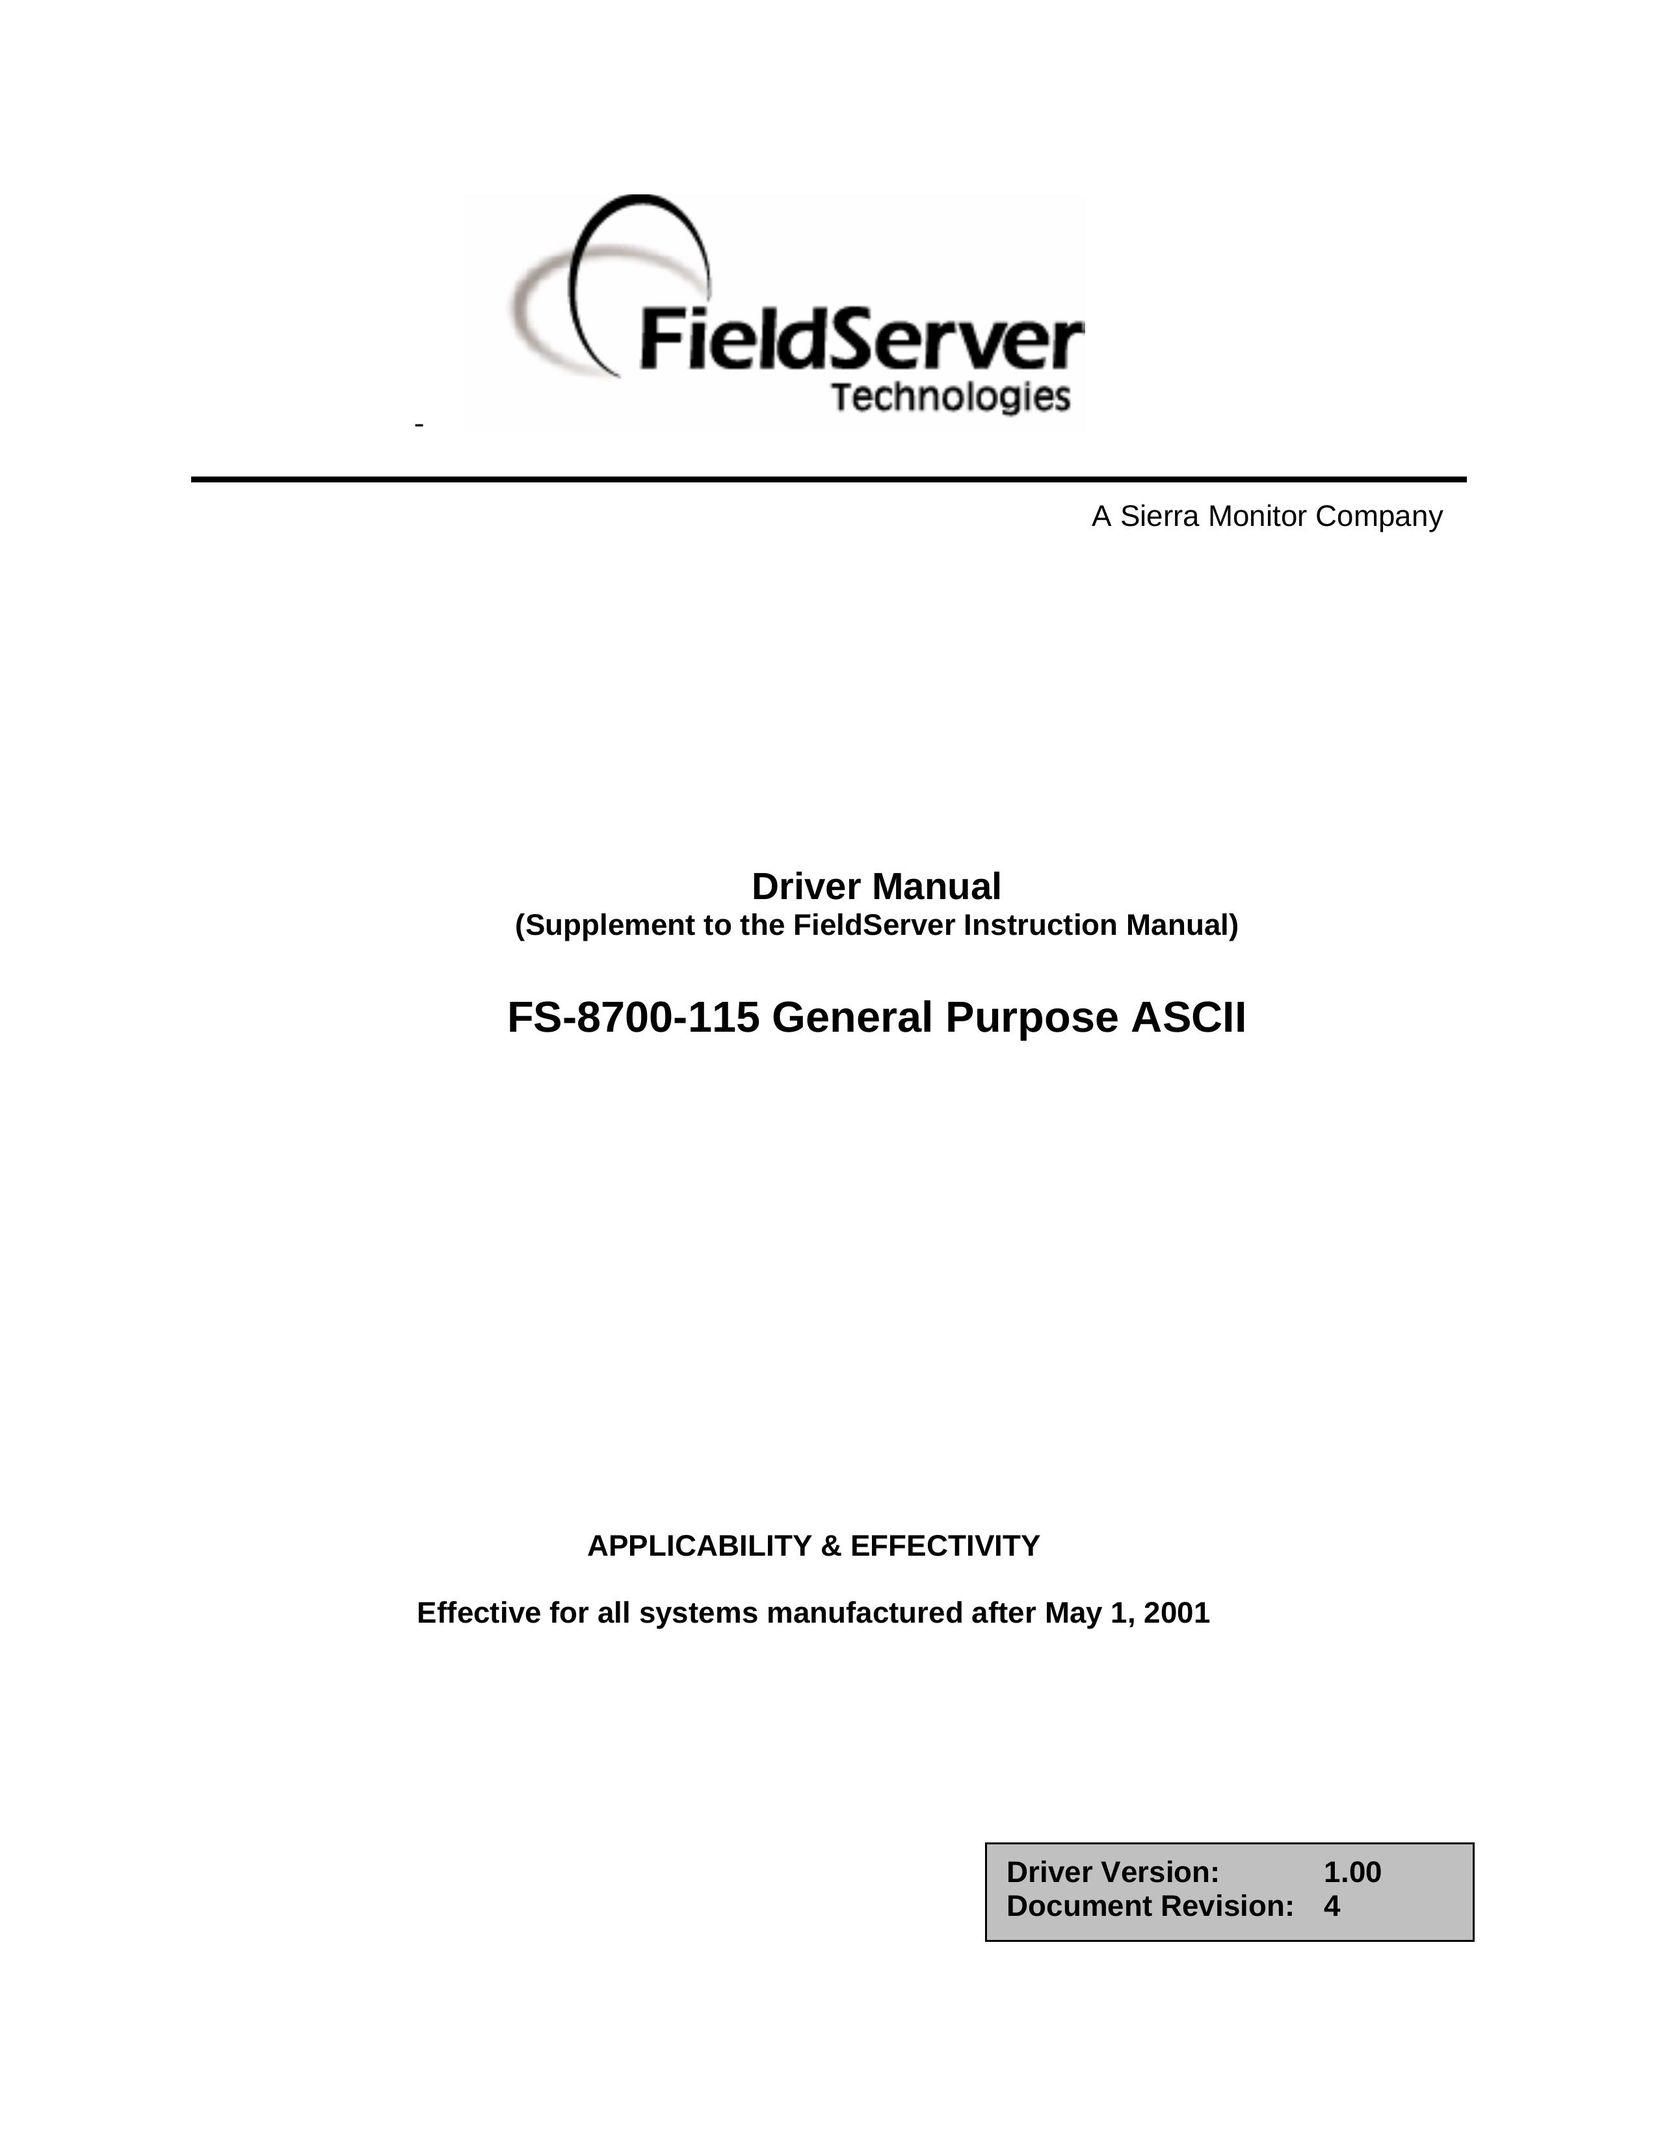 FieldServer FS-8700-115 Computer Drive User Manual